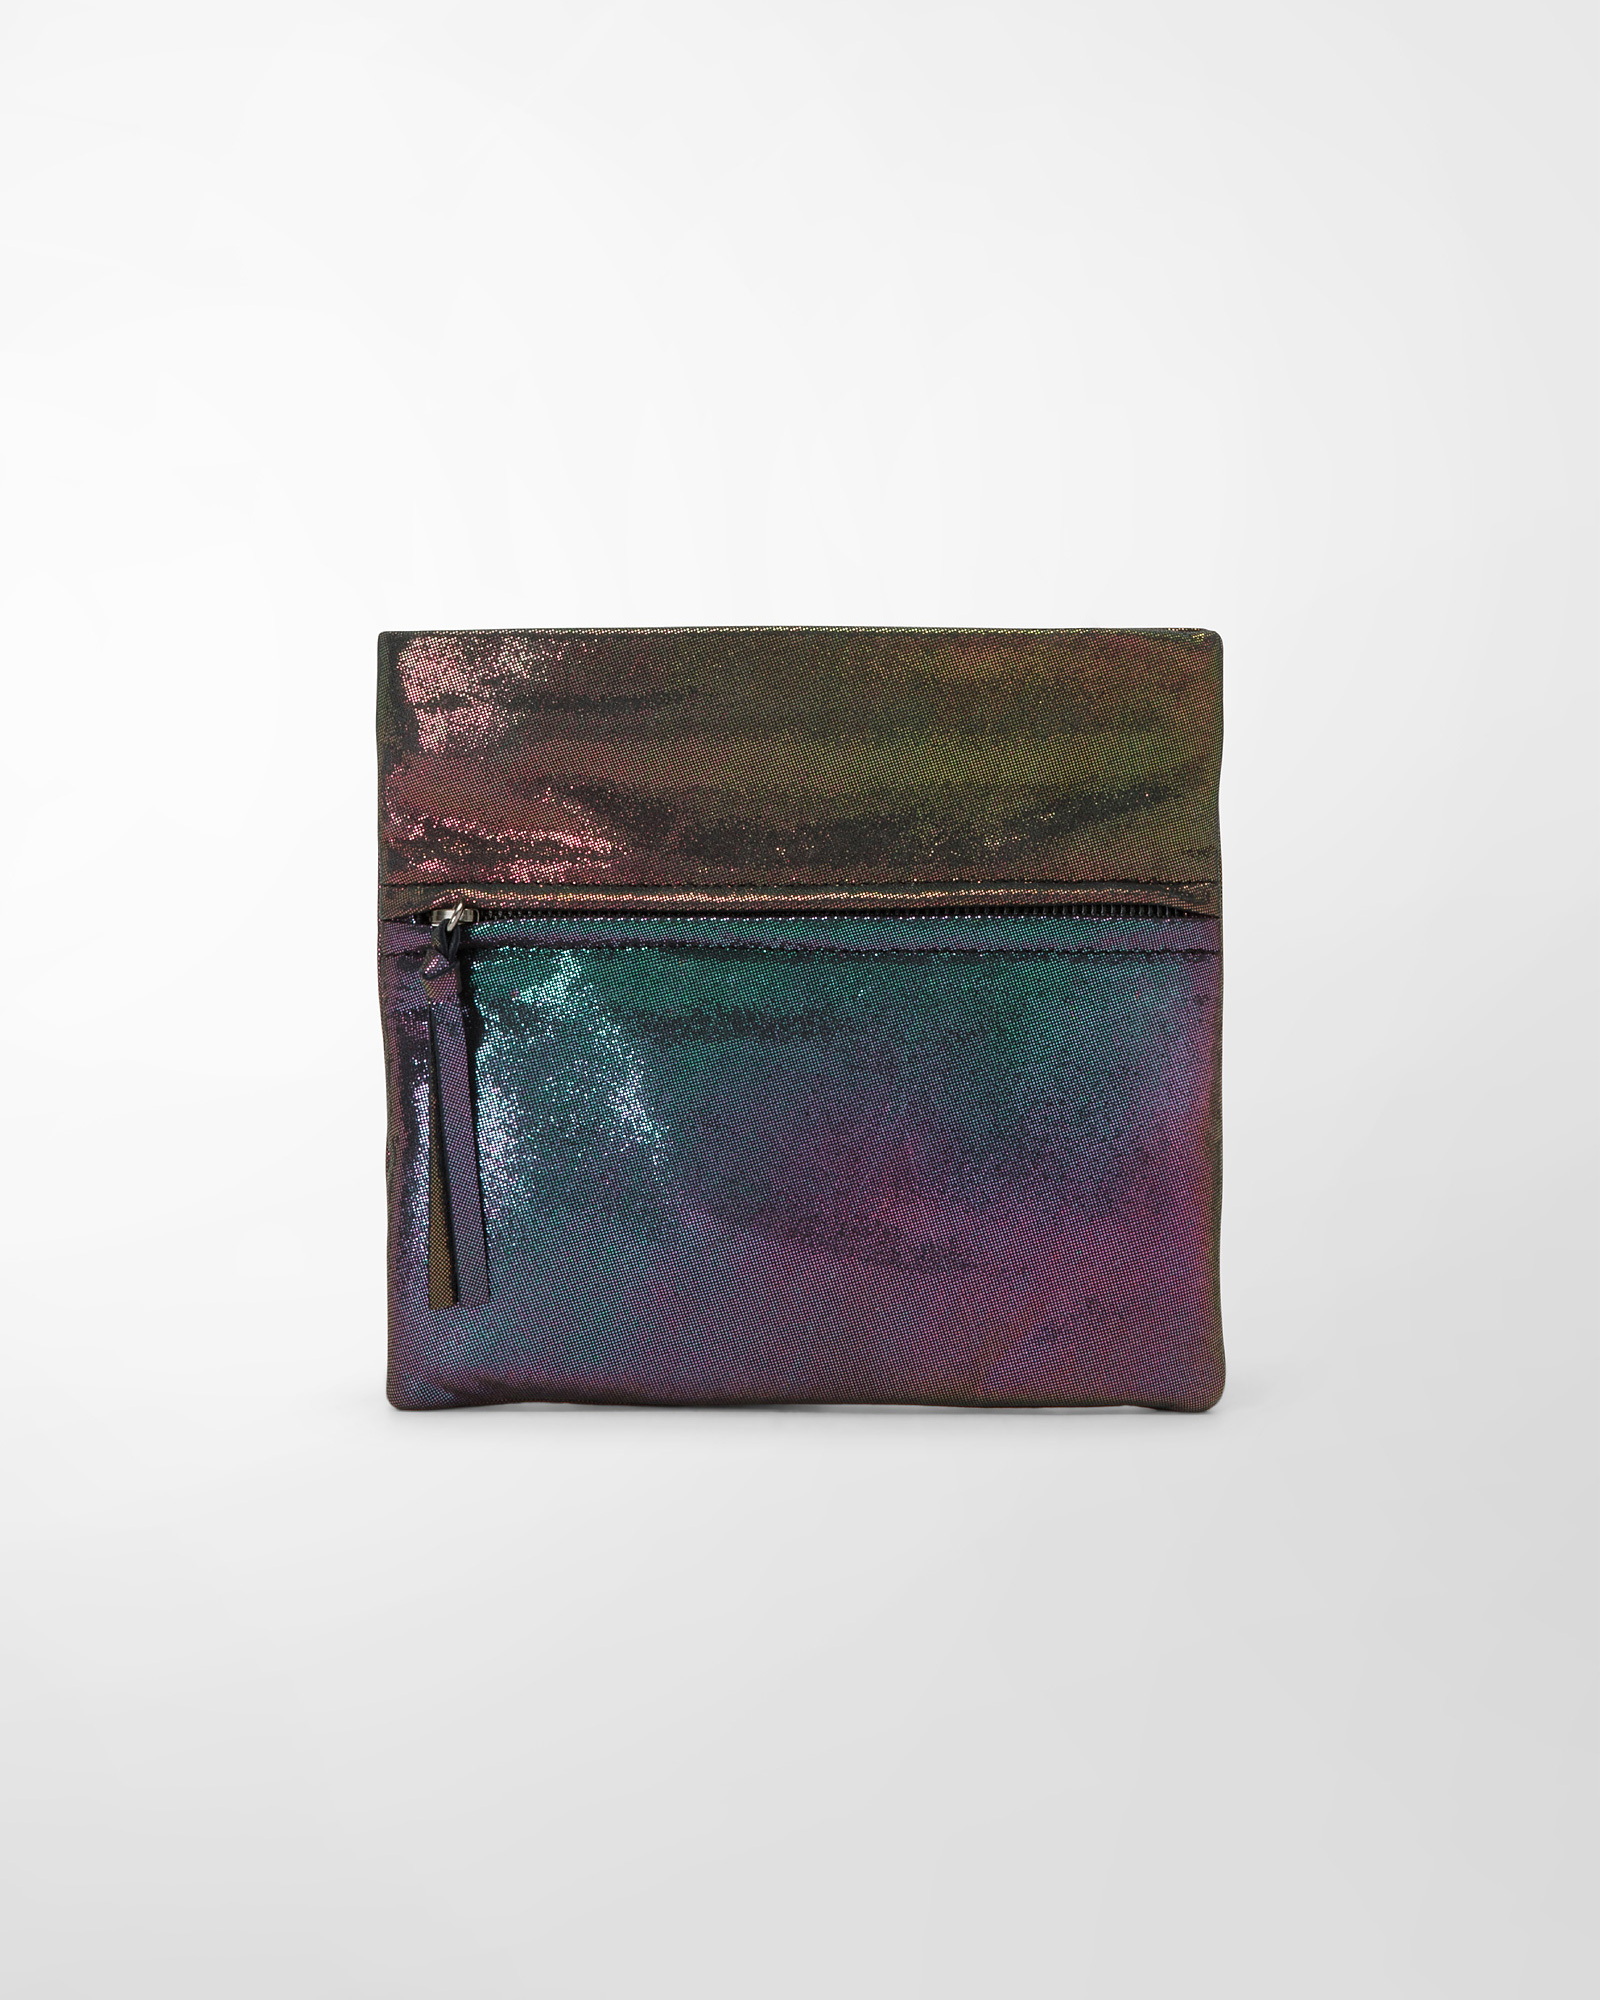 Handbags My Stone handbag STUDIO 54 shoulder bag iridescent purple, leather bag with “venetian” skinny metal chain